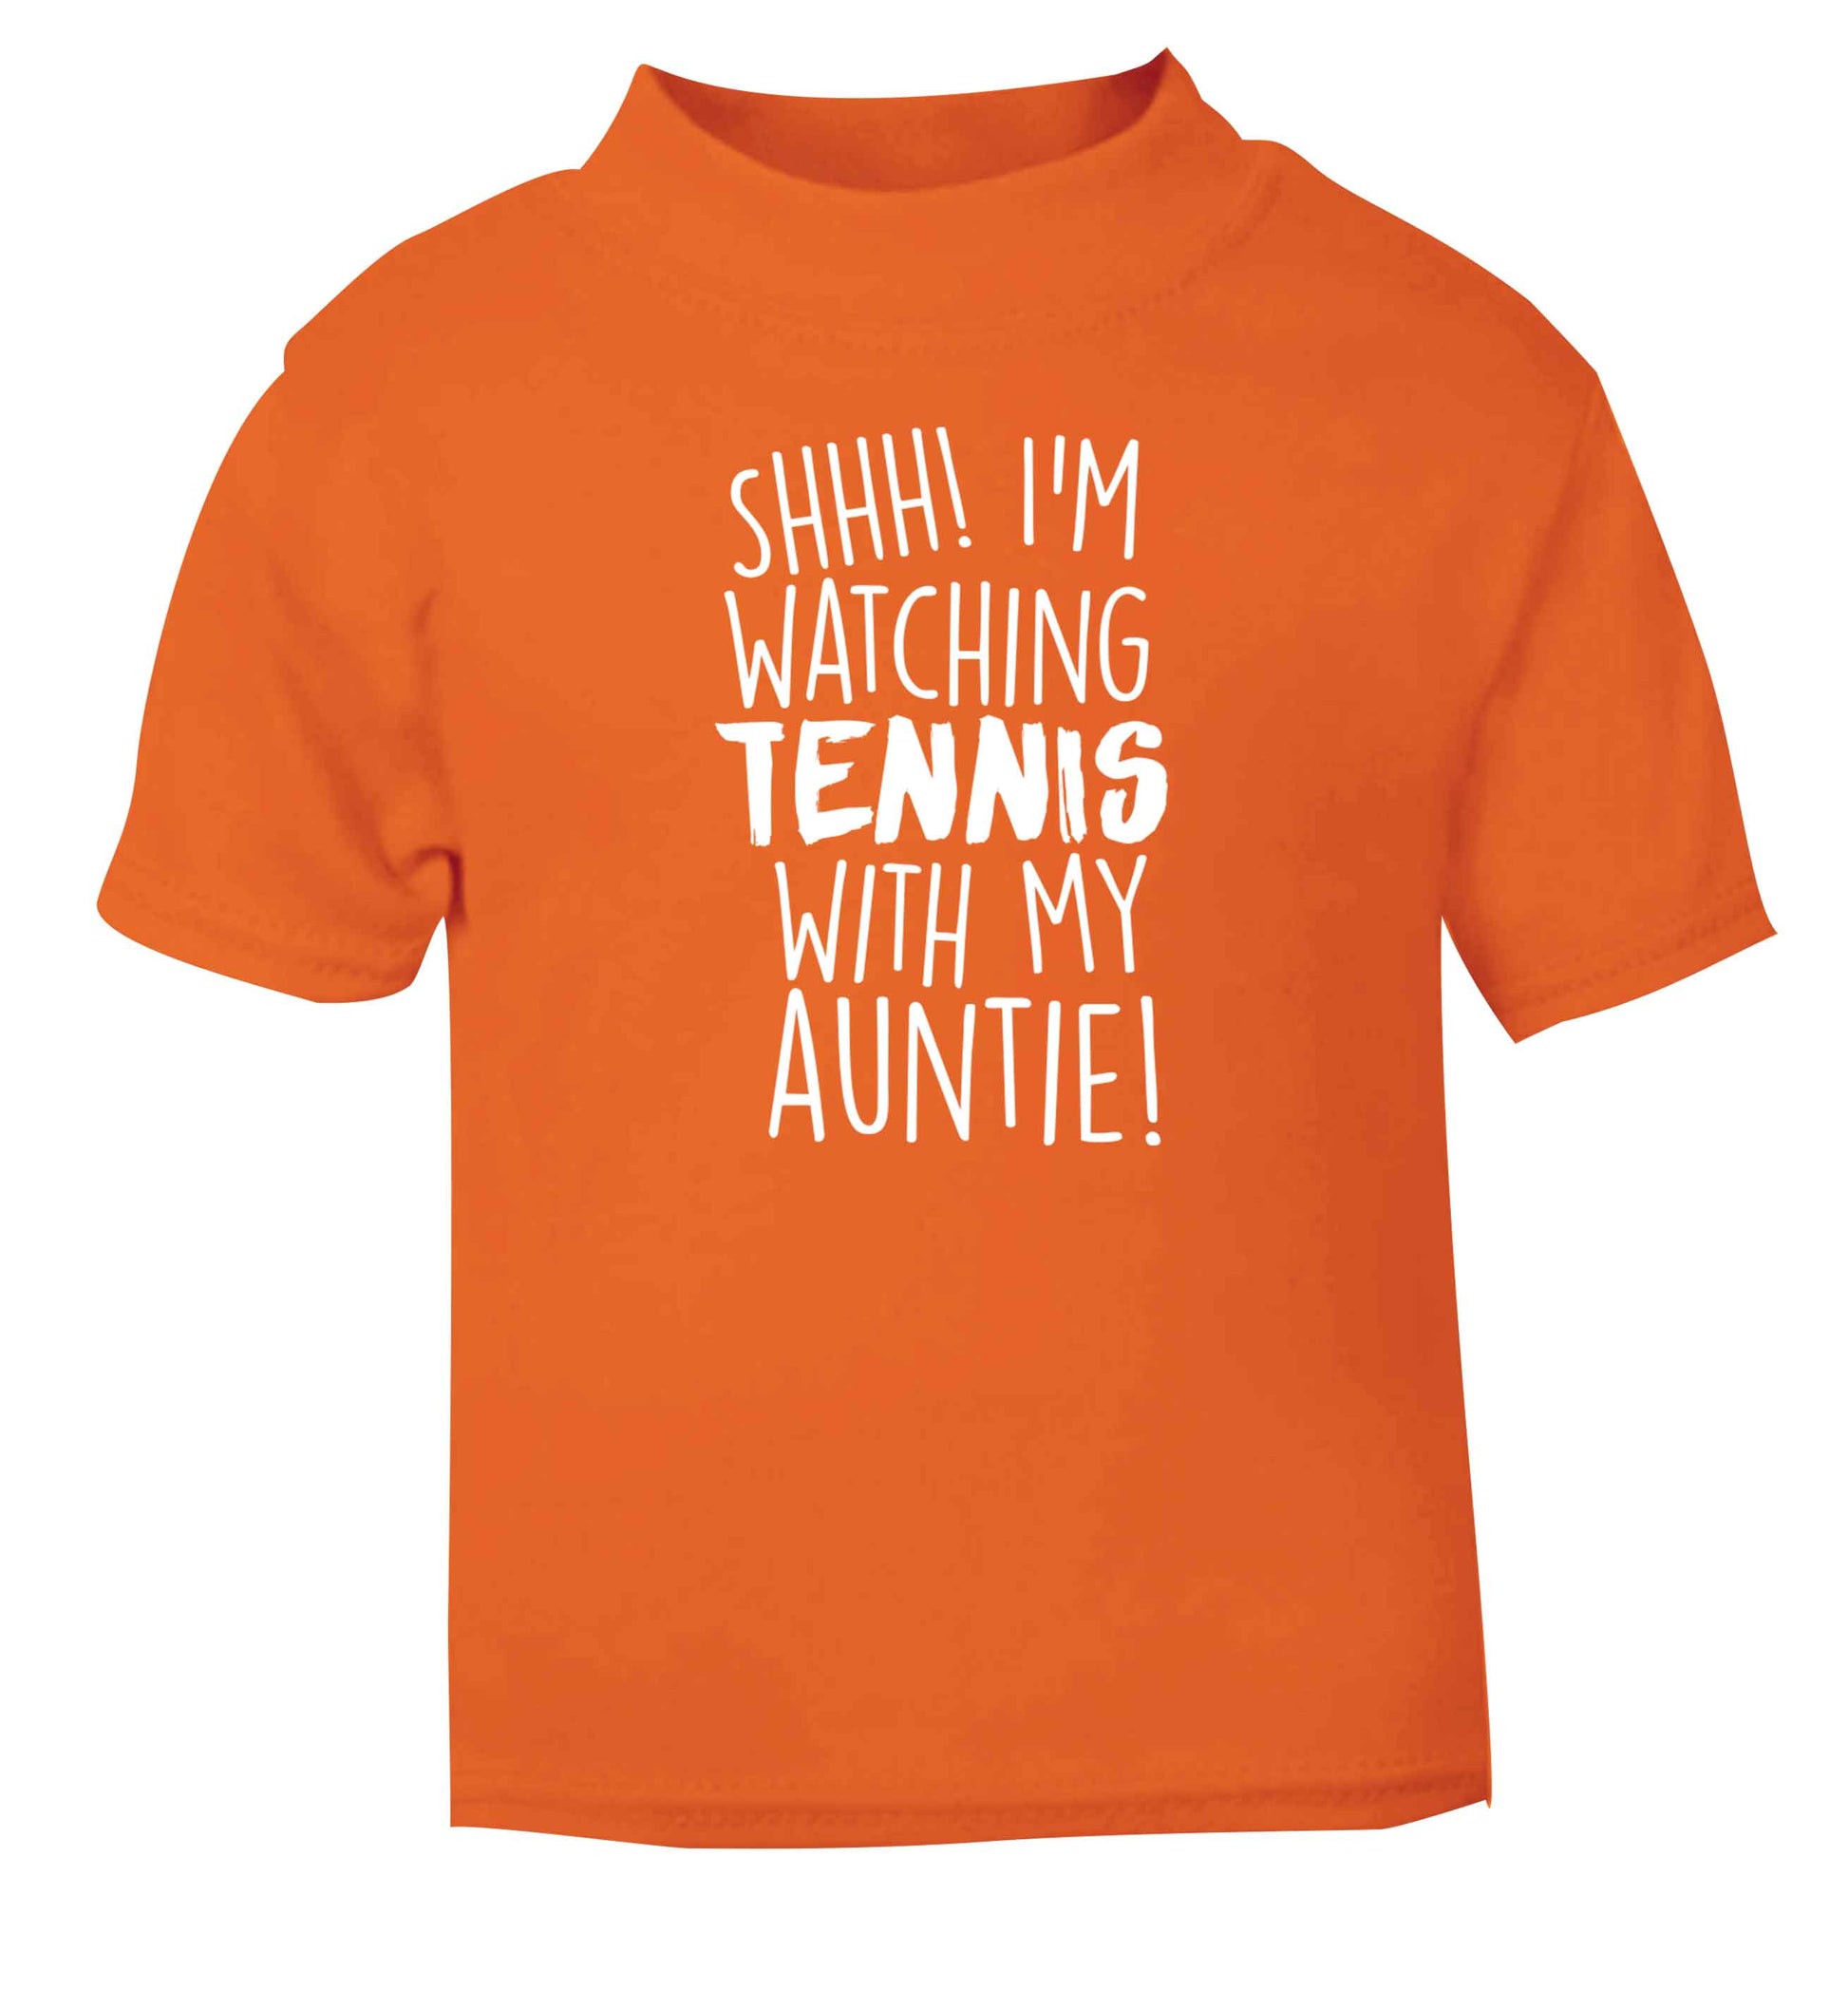 Shh! I'm watching tennis with my auntie! orange Baby Toddler Tshirt 2 Years